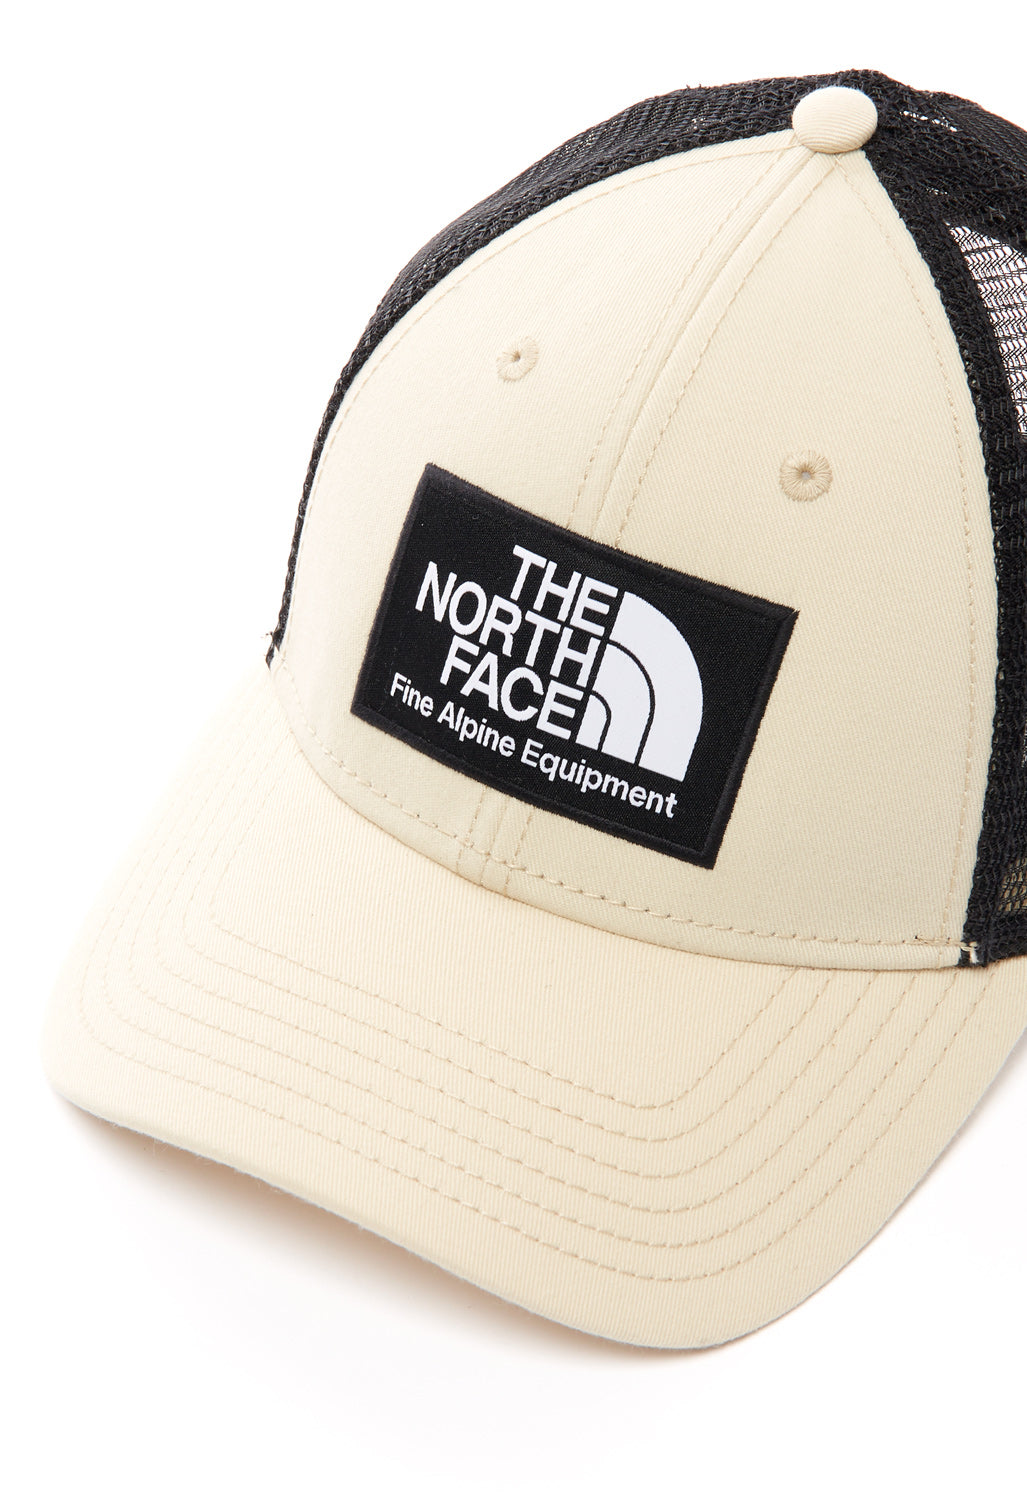 The North Face Mudder Trucker Hat - Gravel